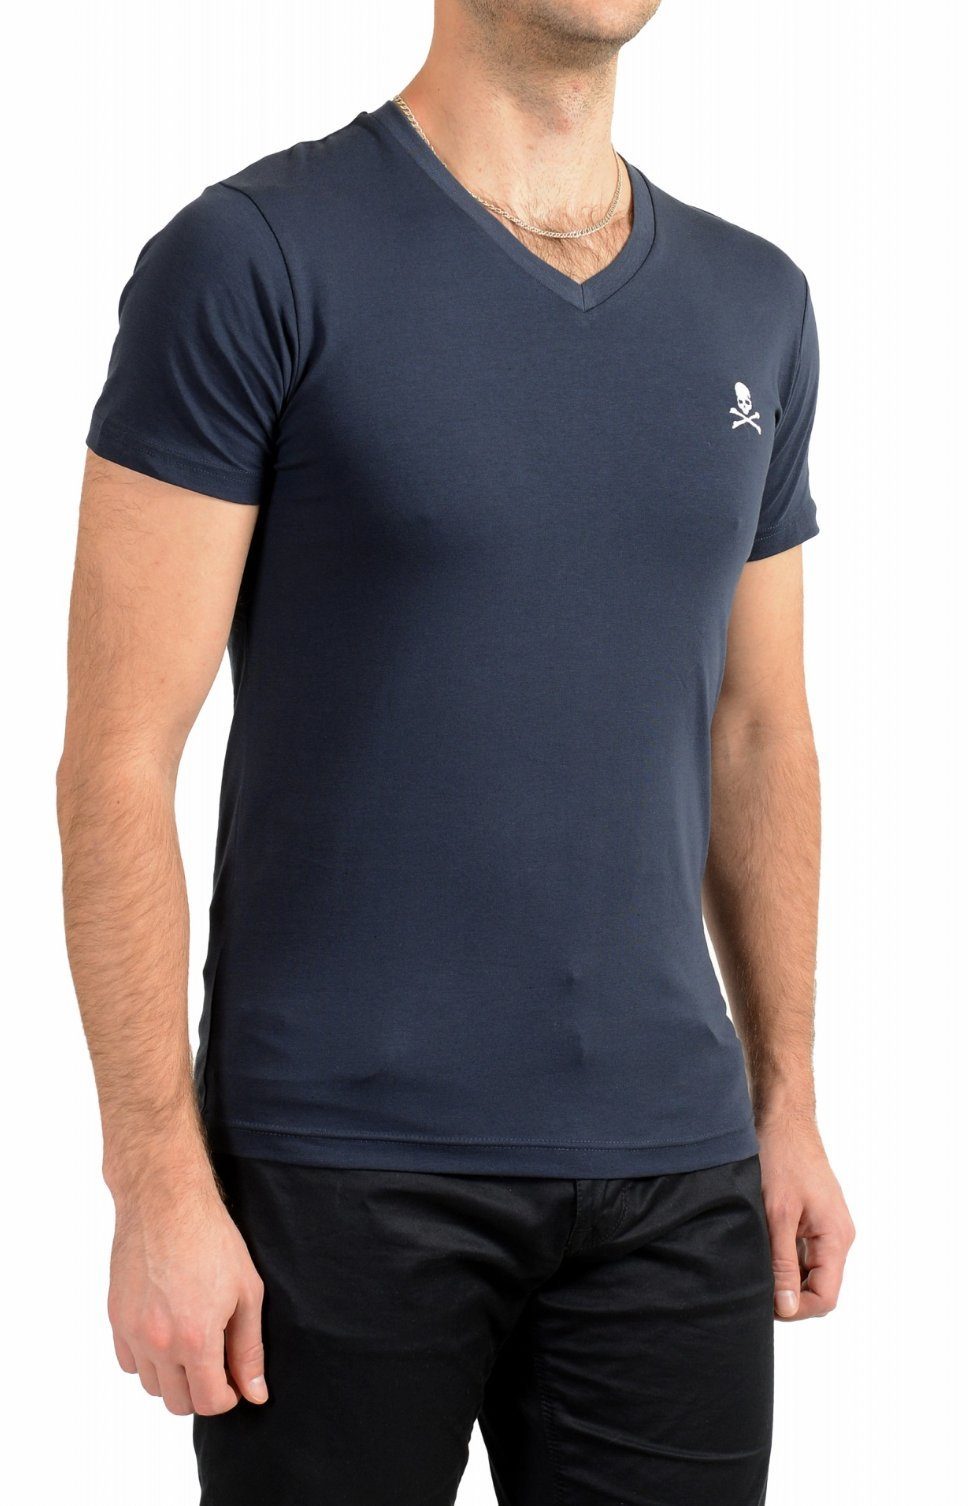 Philipp PHILIPP PLEIN T-Shirt Blau V-Ausschnitt, Plein T-Shirts,